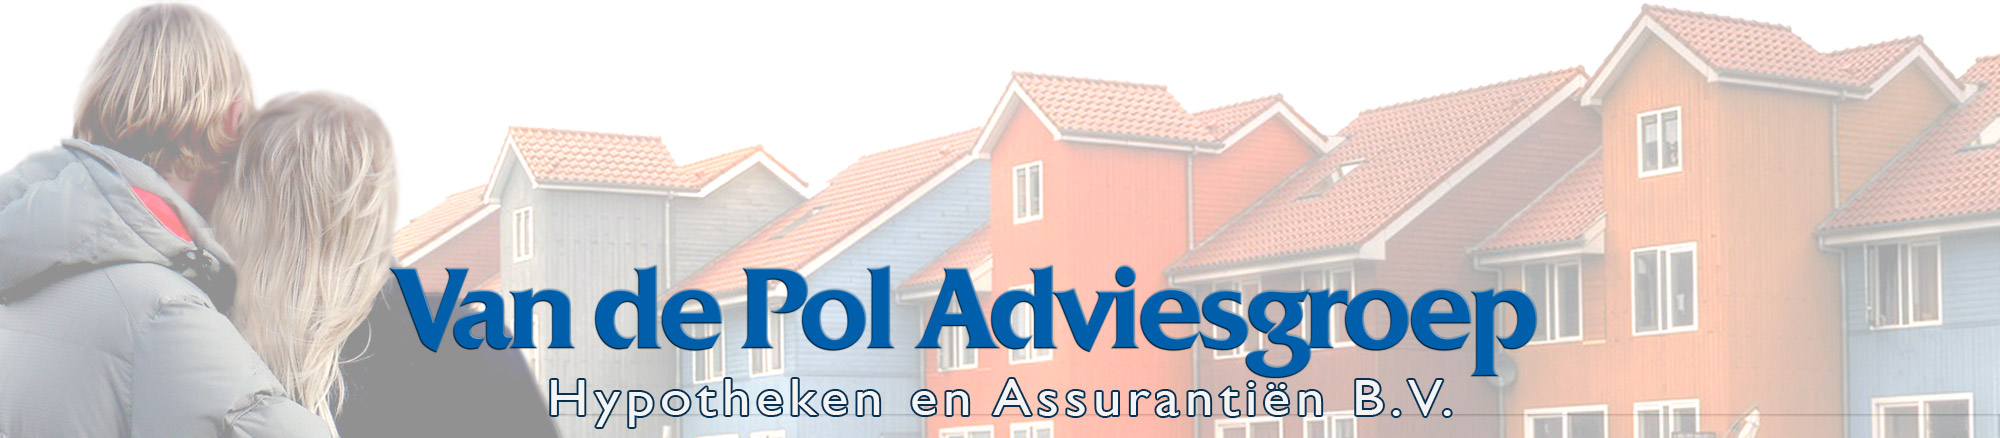 Logo van de Pol Adviesgroep